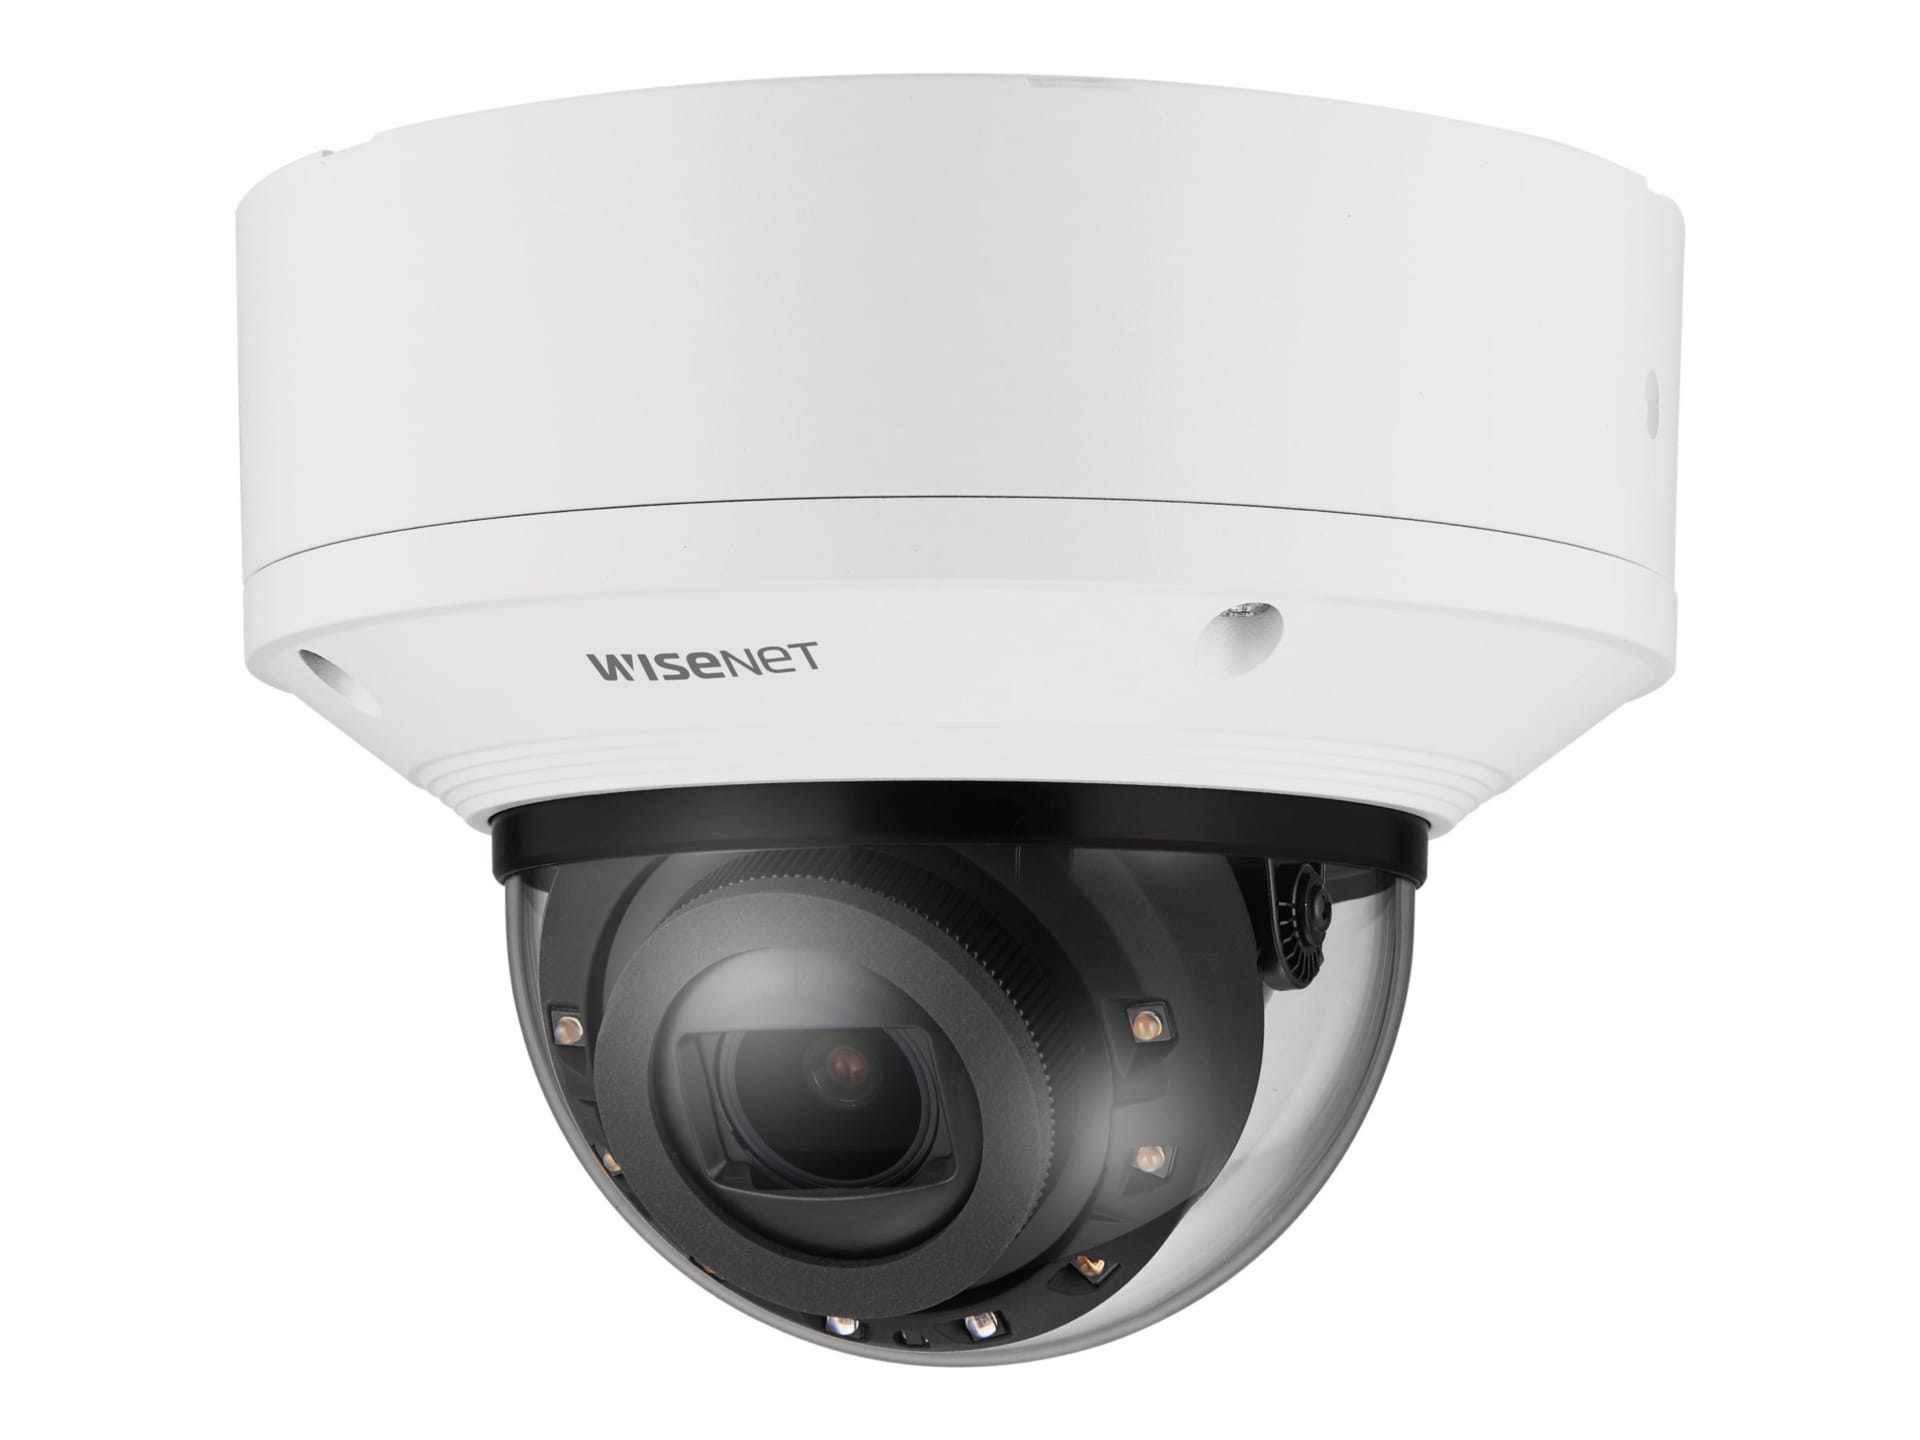 Hanwha Techwin WiseNet X XND-9083RV - network surveillance camera - dome